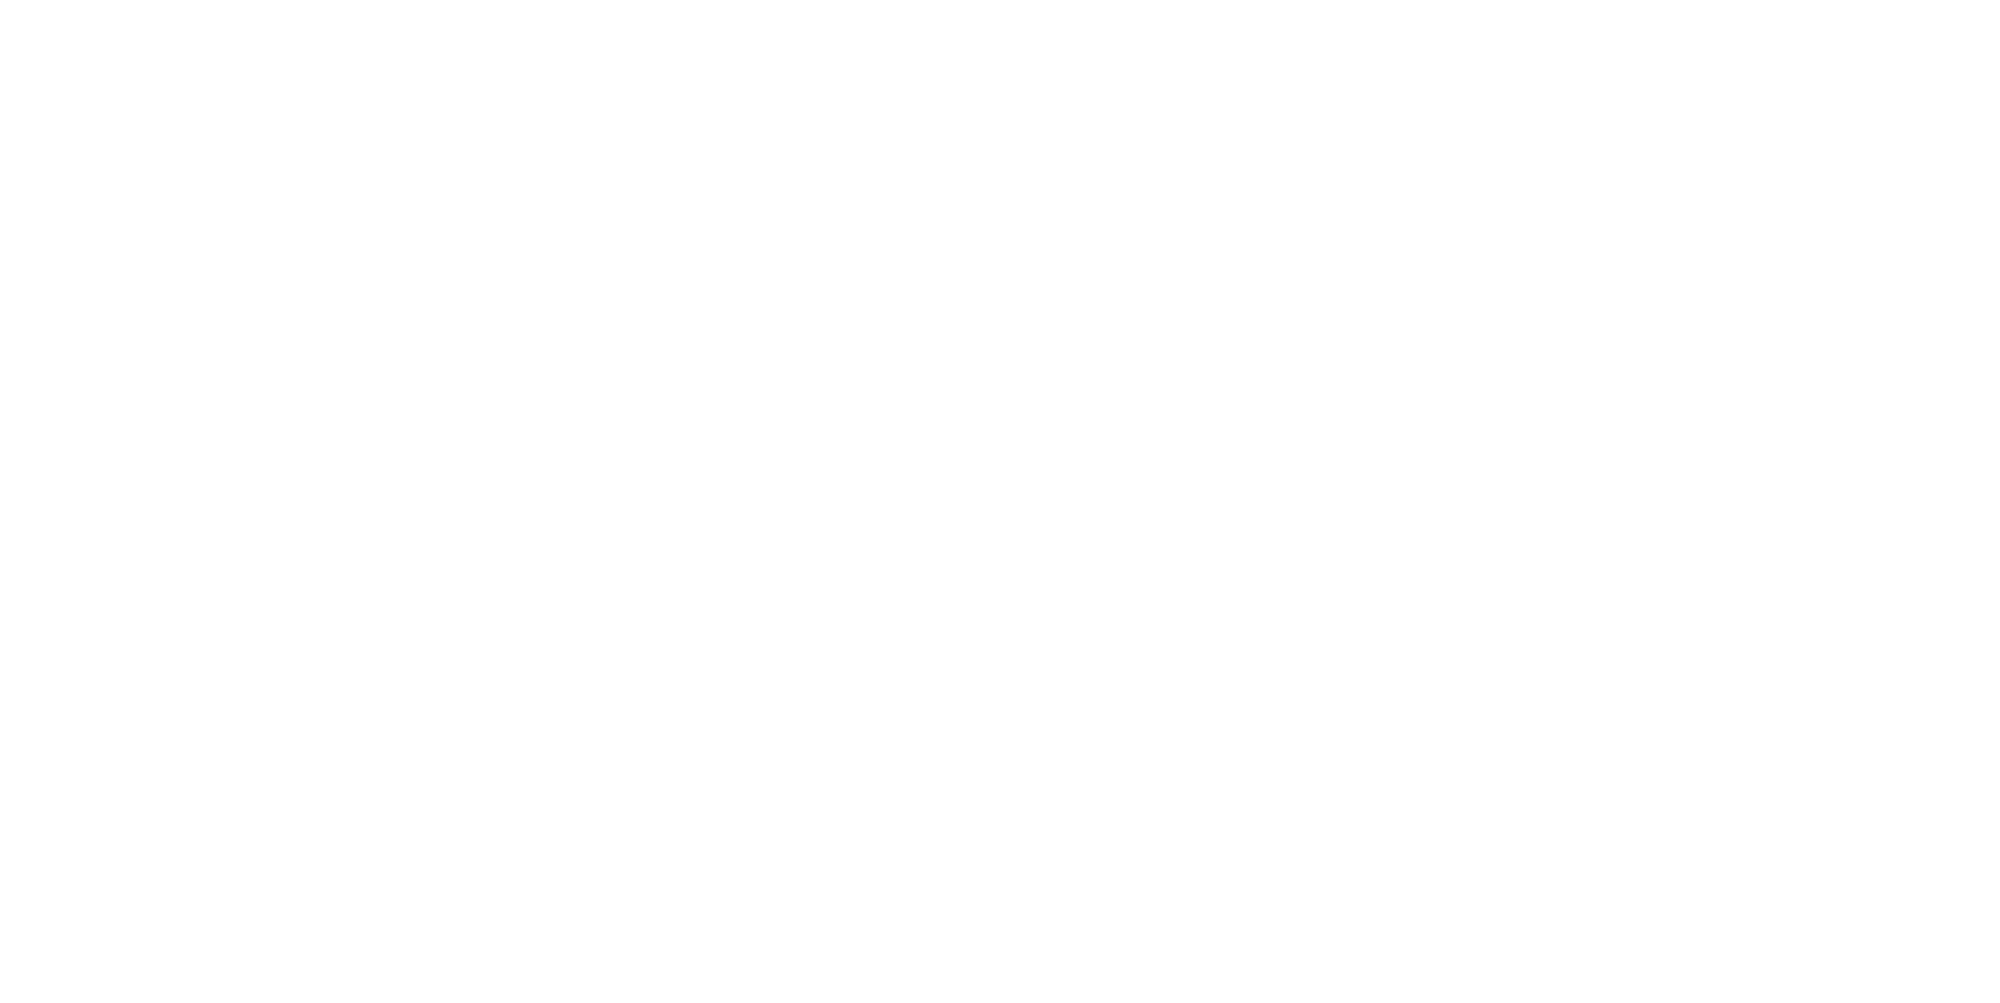 The Secret Vine